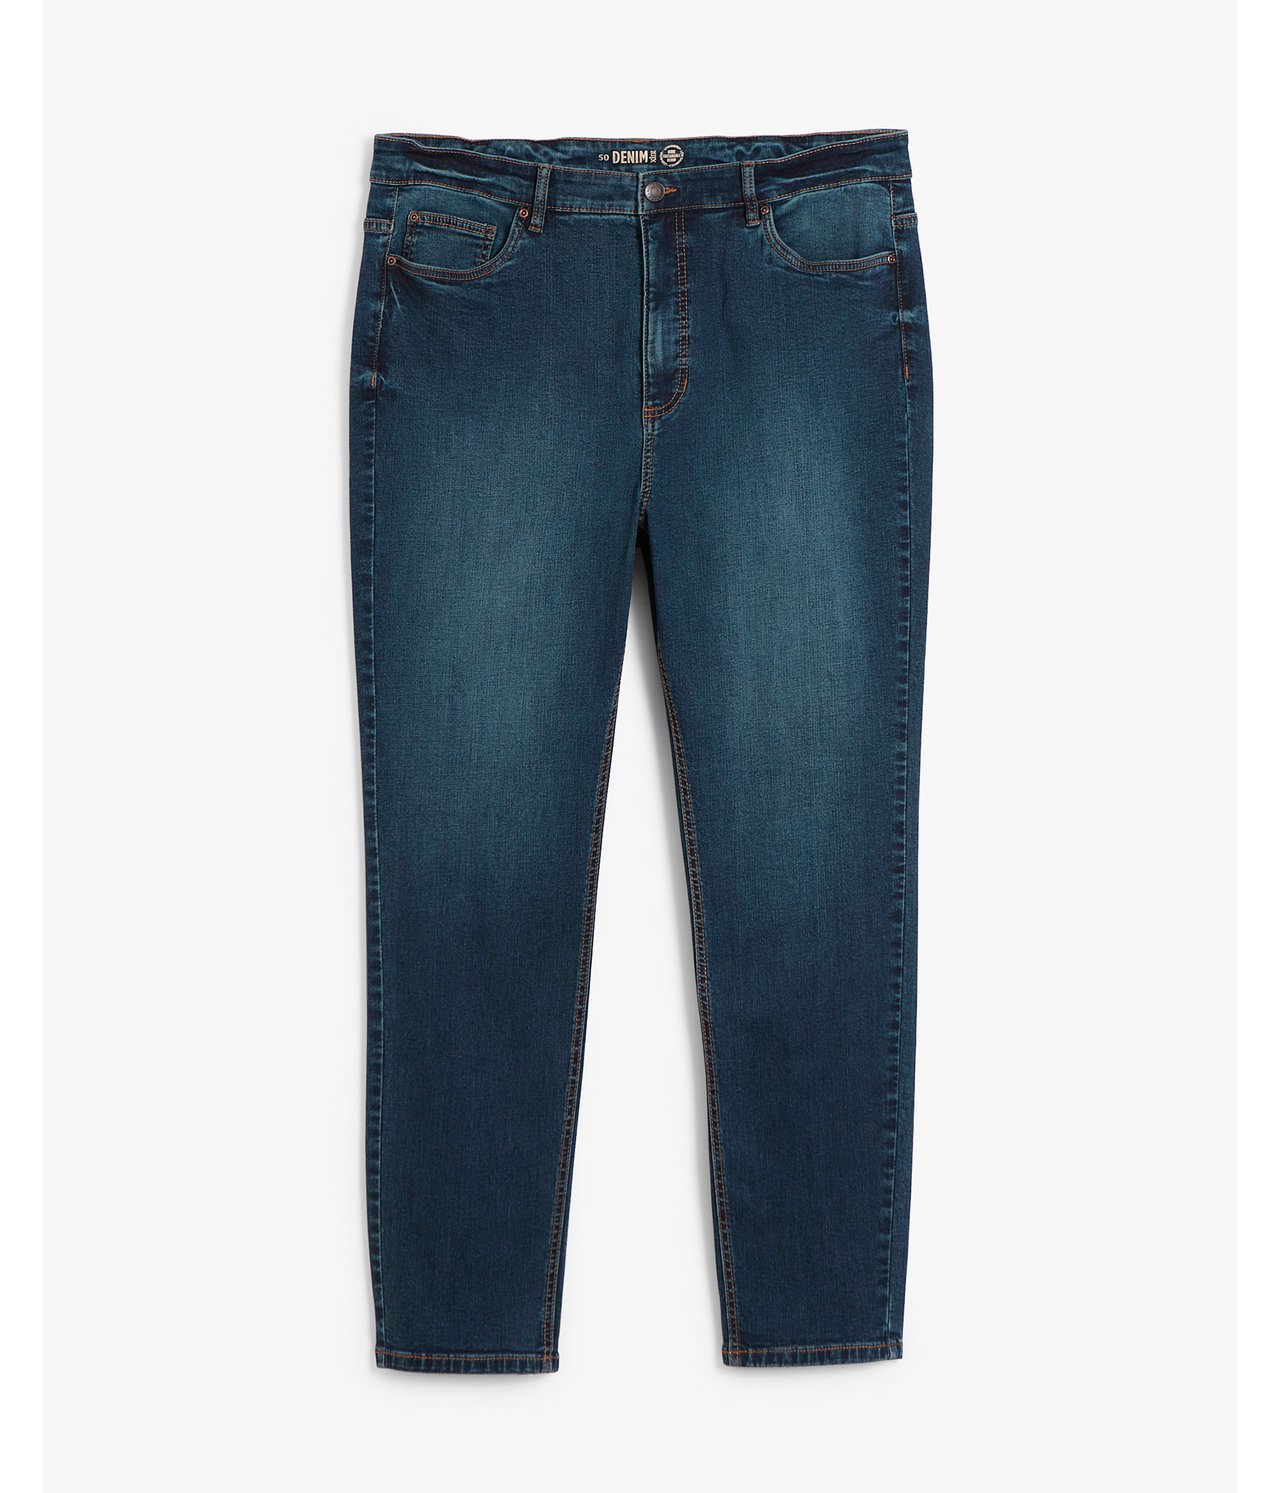 Jenny jeans straight slim fit Denimi - 44 - 5